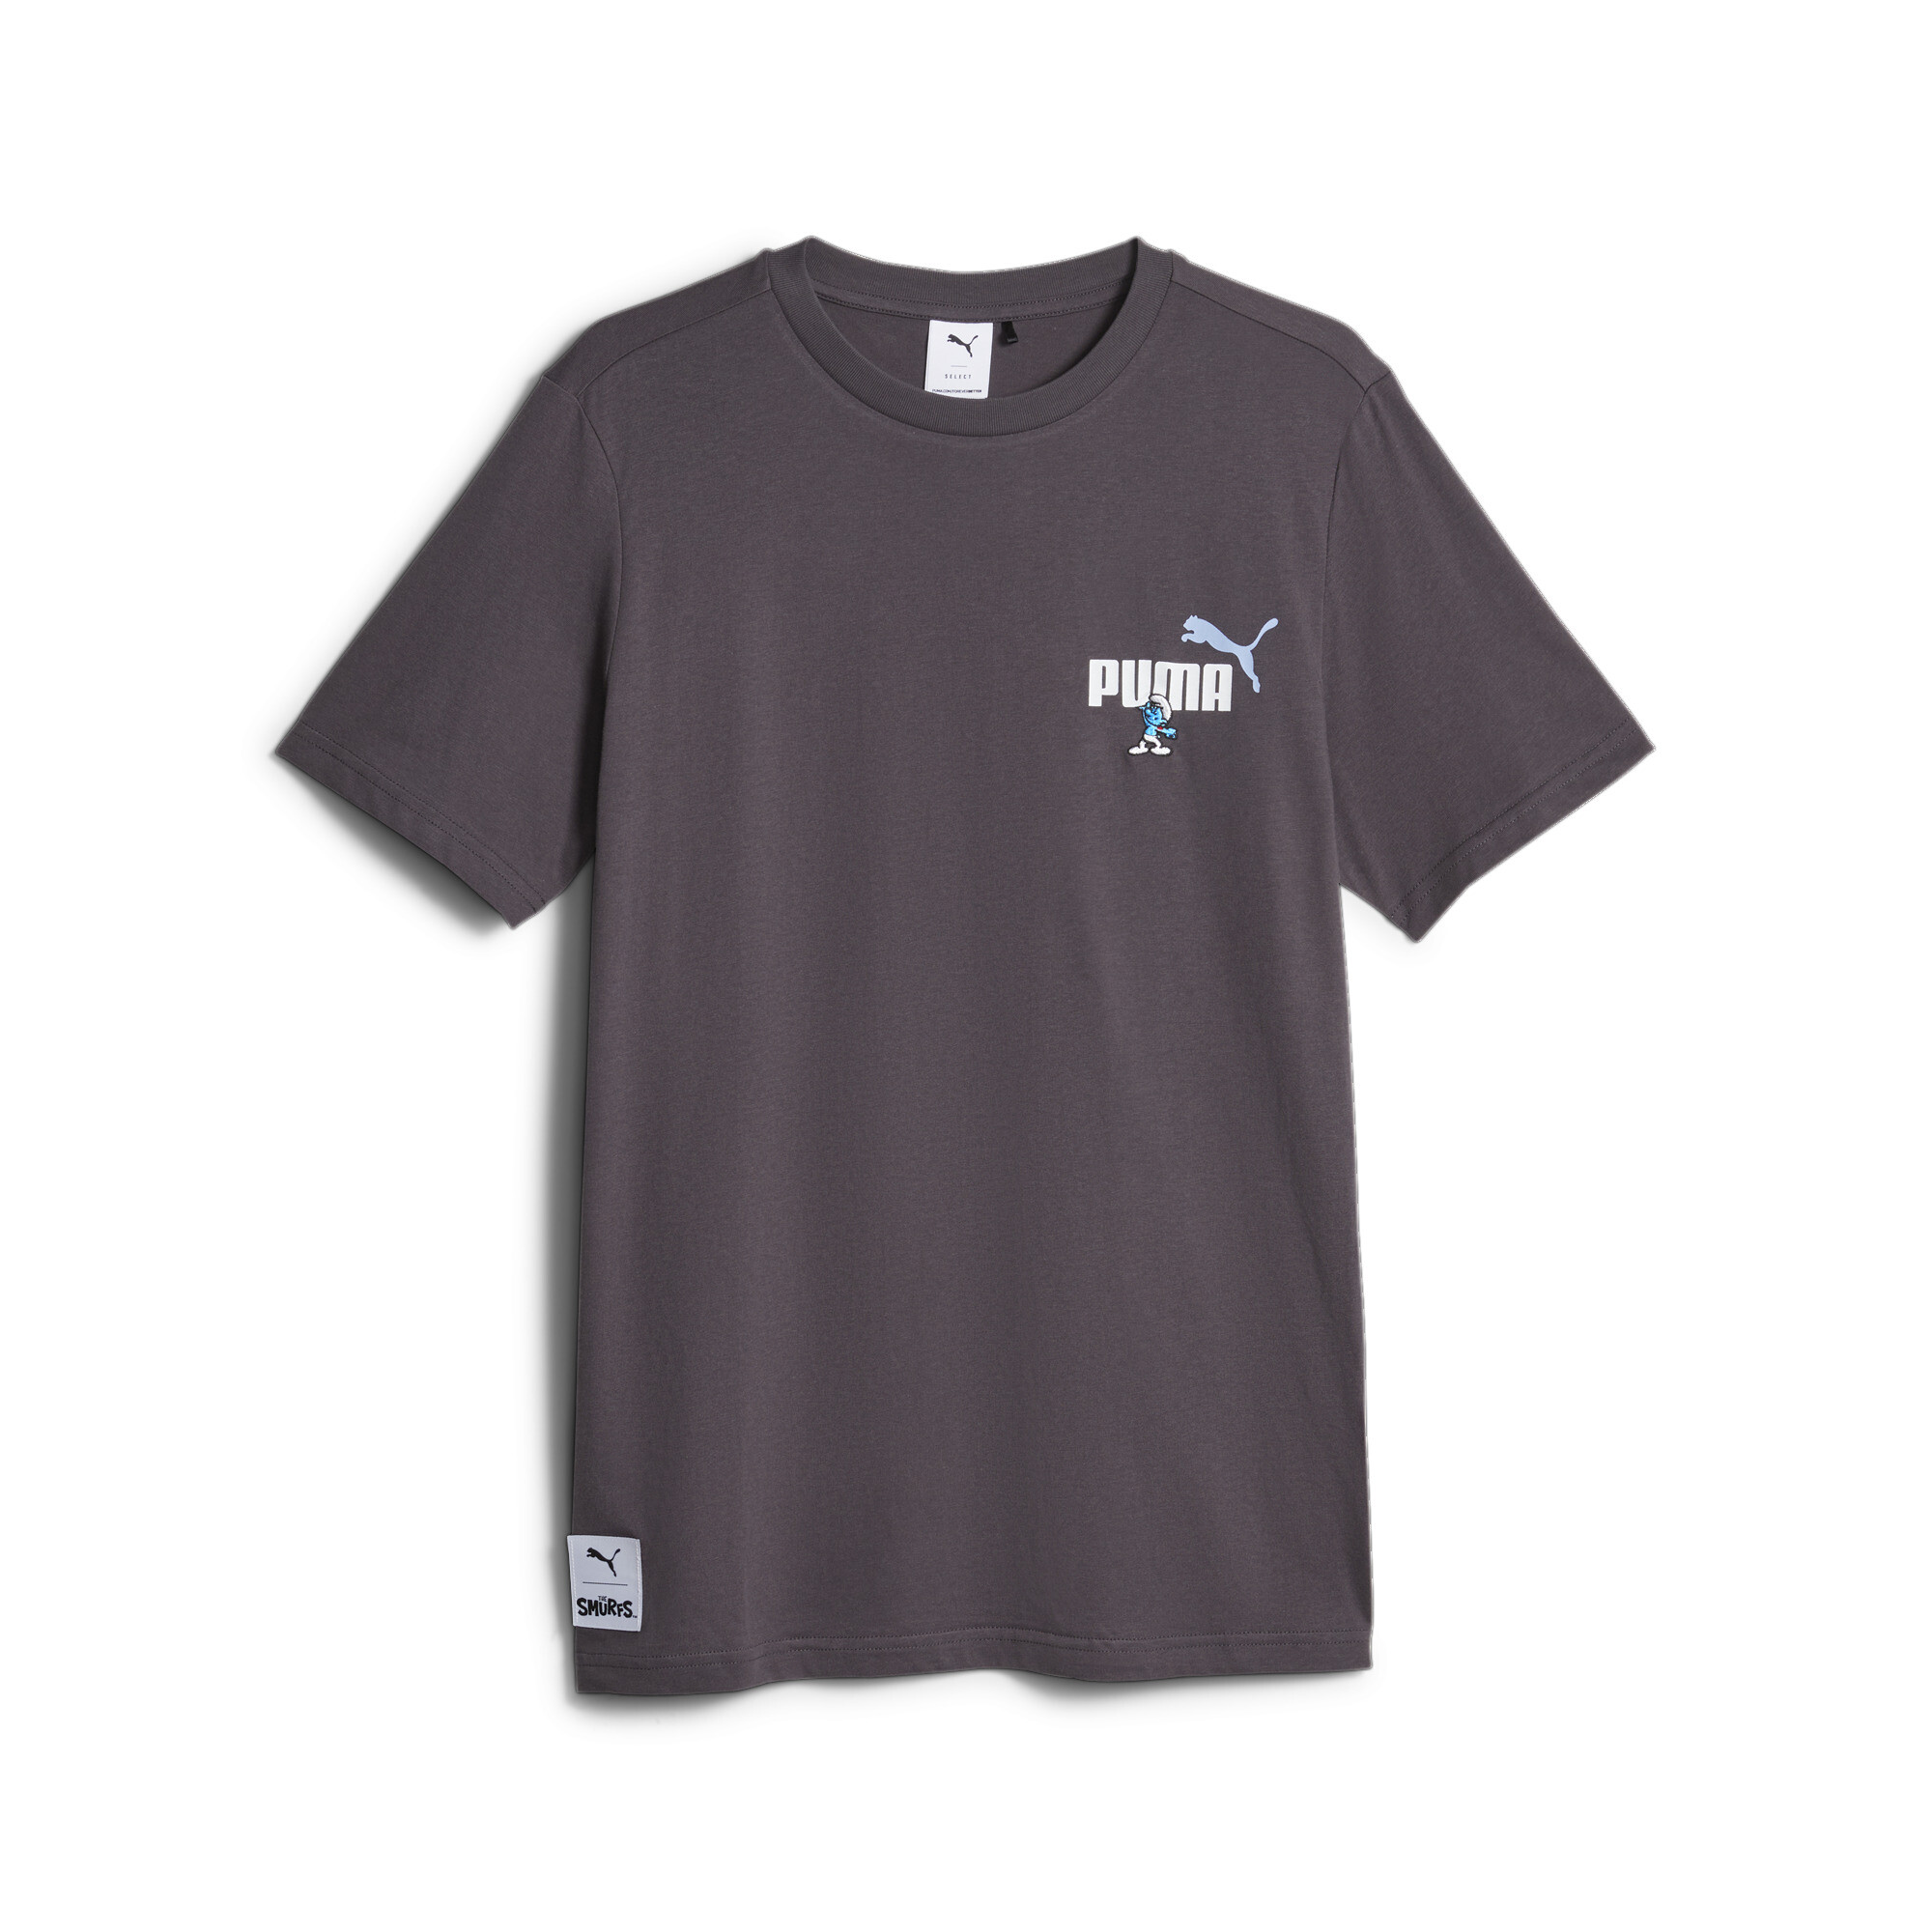 Men's PUMA X THE SMURFS T-Shirt In Gray, Size Medium